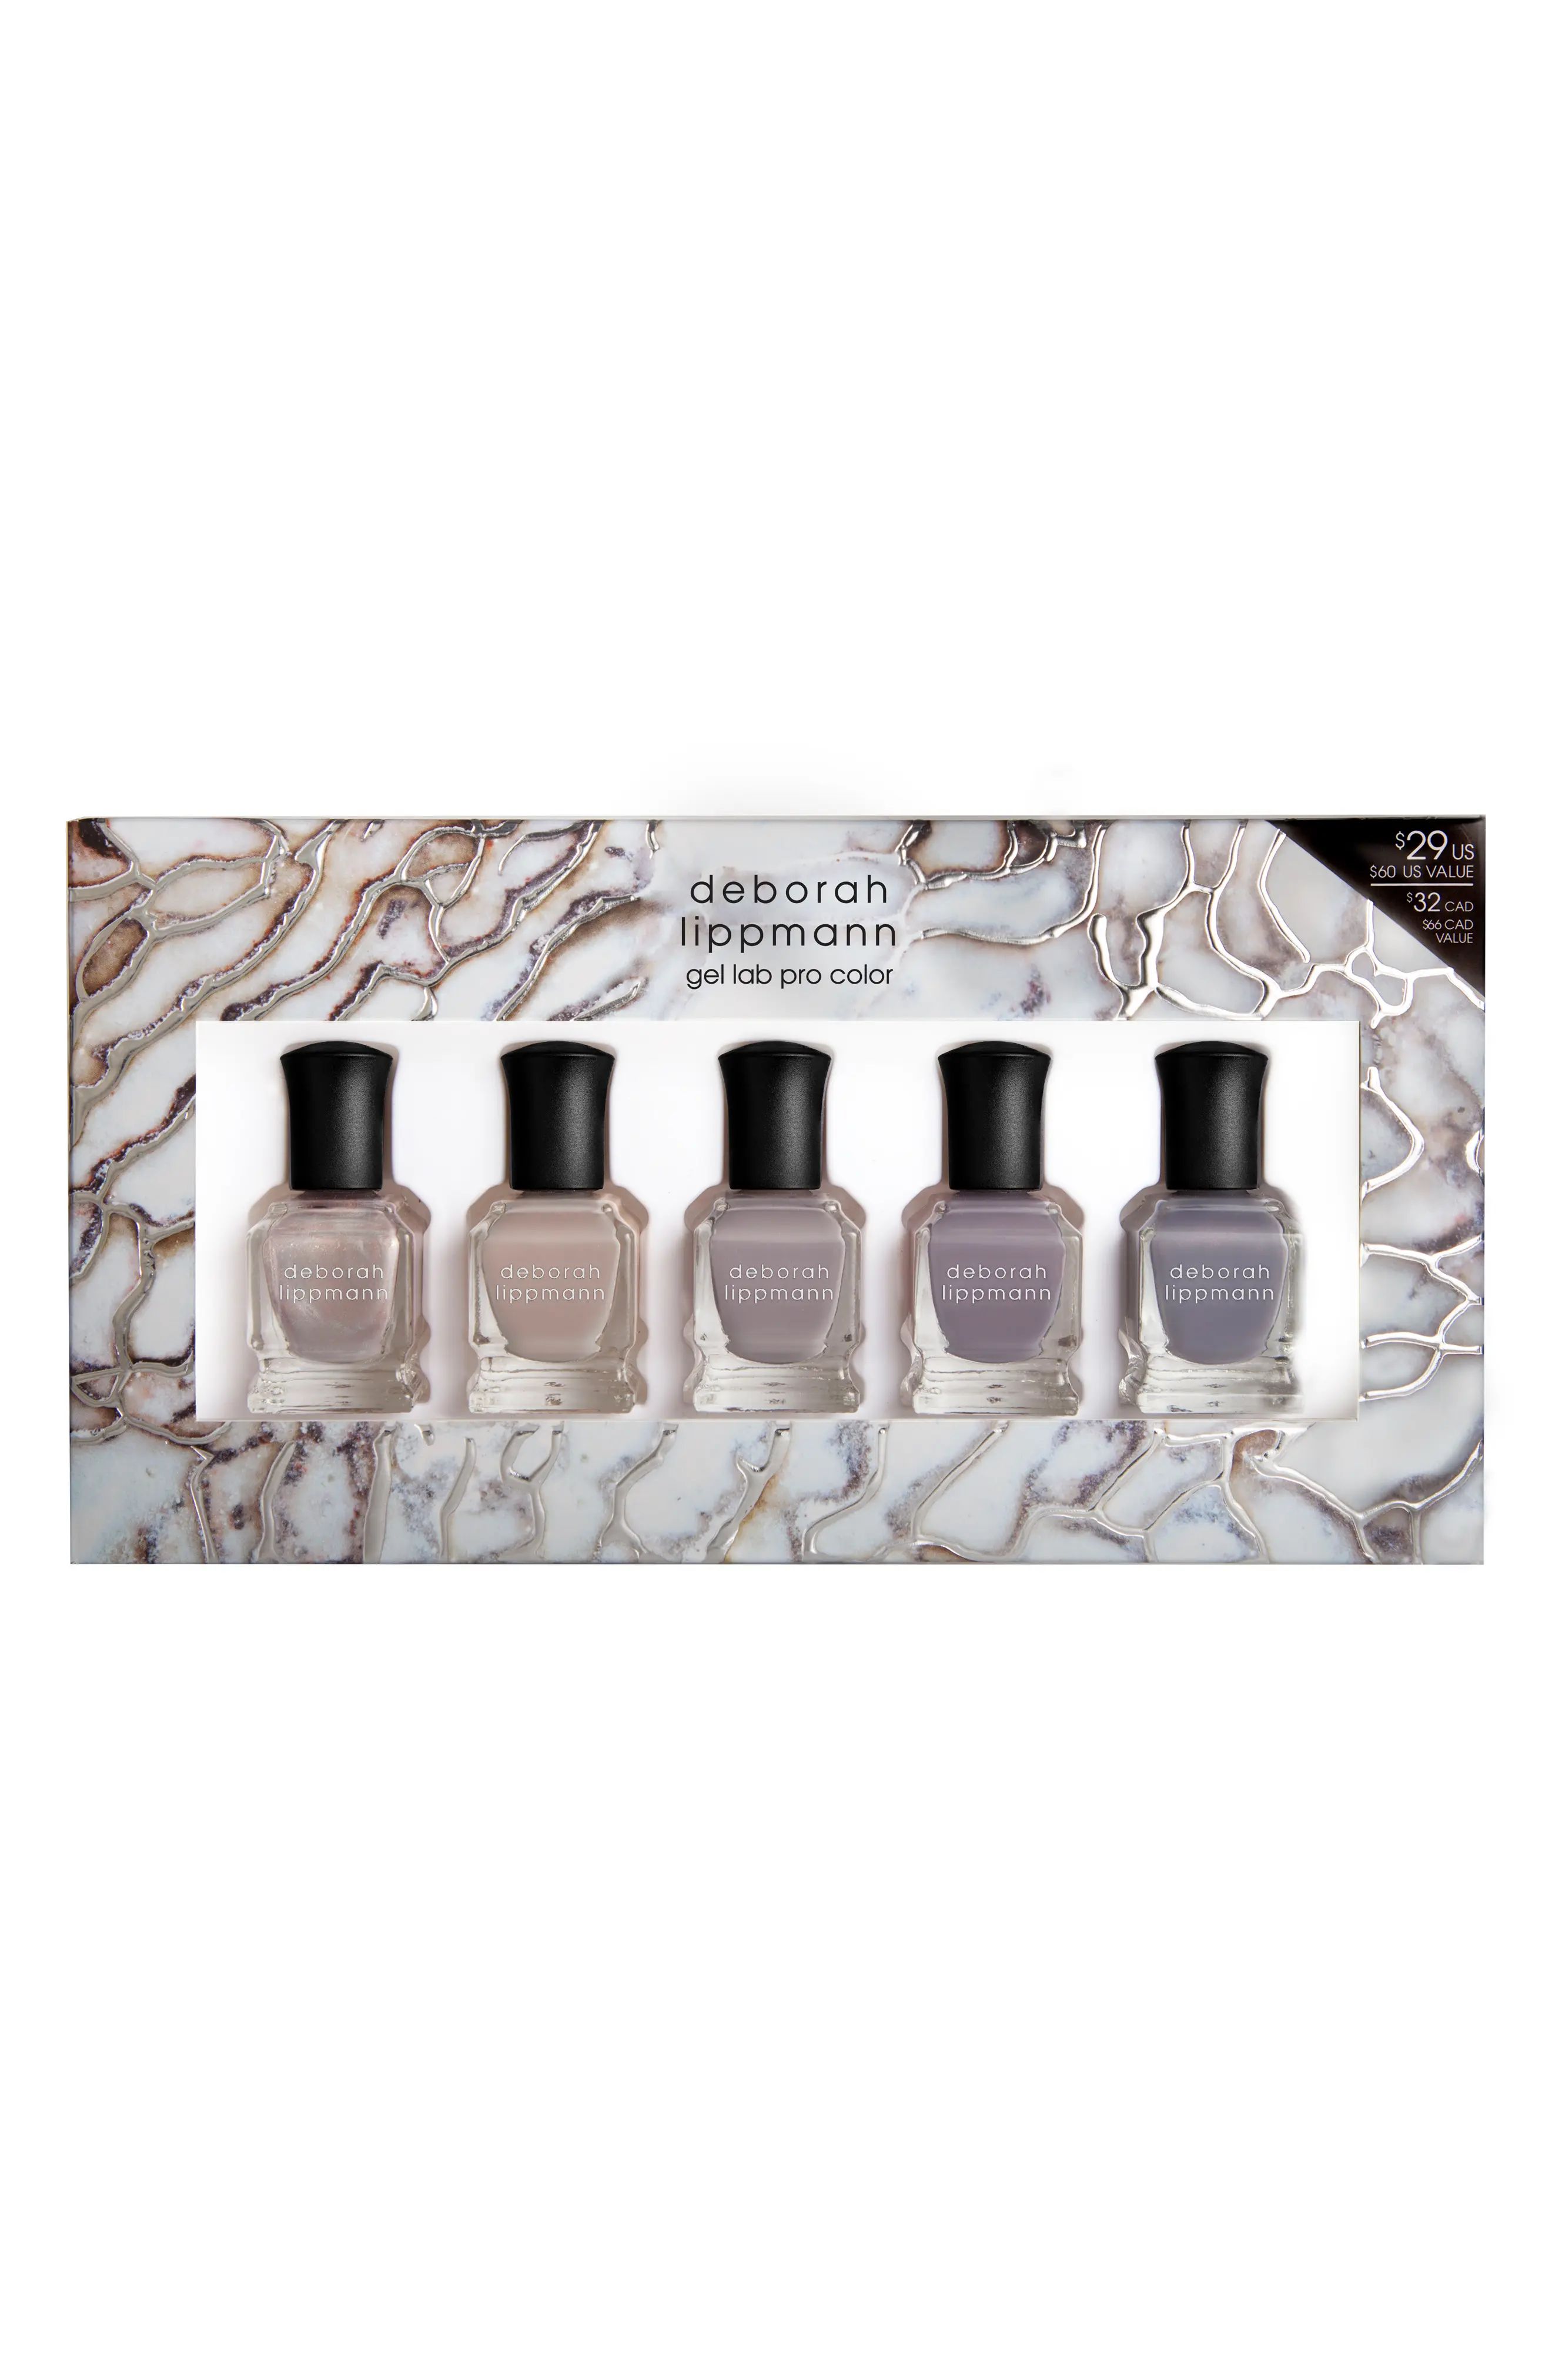 Deborah Lippmann Gel Lab Pro Nail Color Set ($60 Value) | Nordstrom